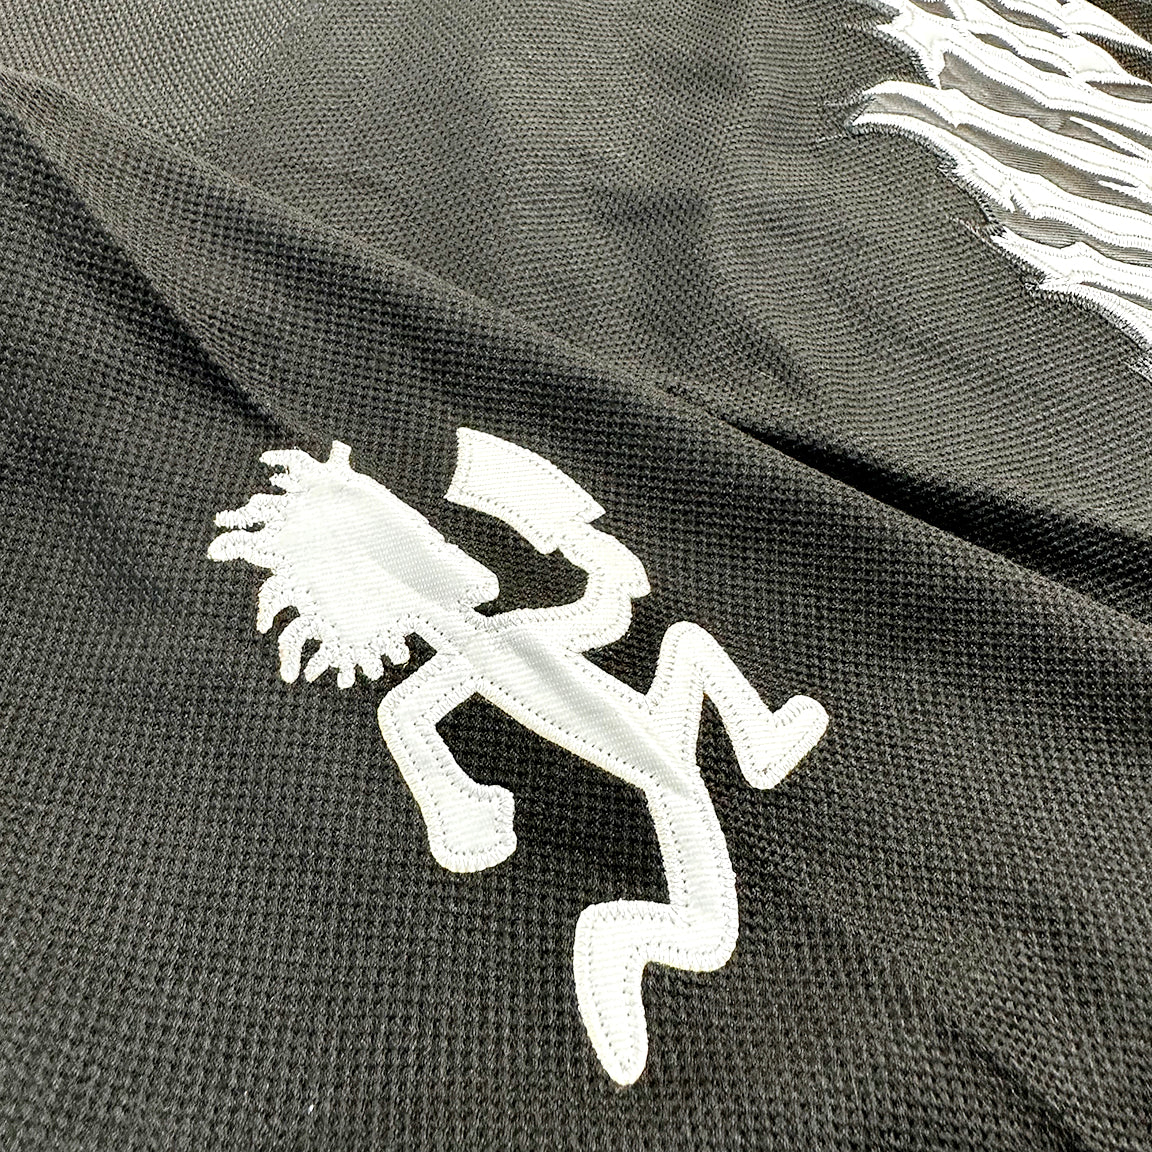 Official Ouija Macc Detritus Football jersey - Black